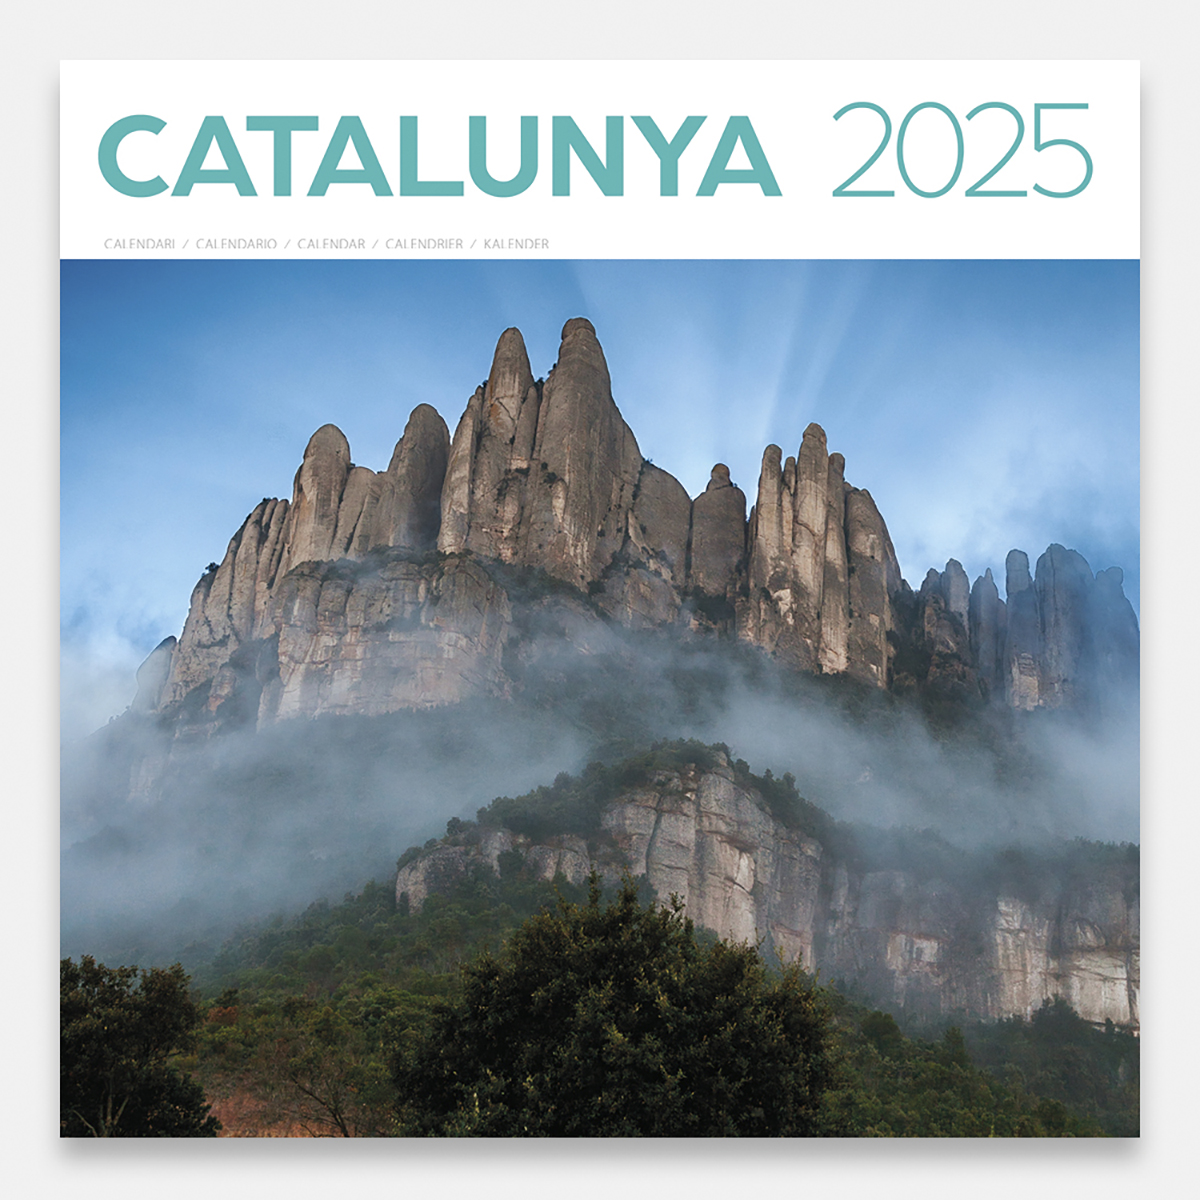 Calendar 2025 Catalonia 25catg calendario pared 2025 catalunya cataluna catalonia